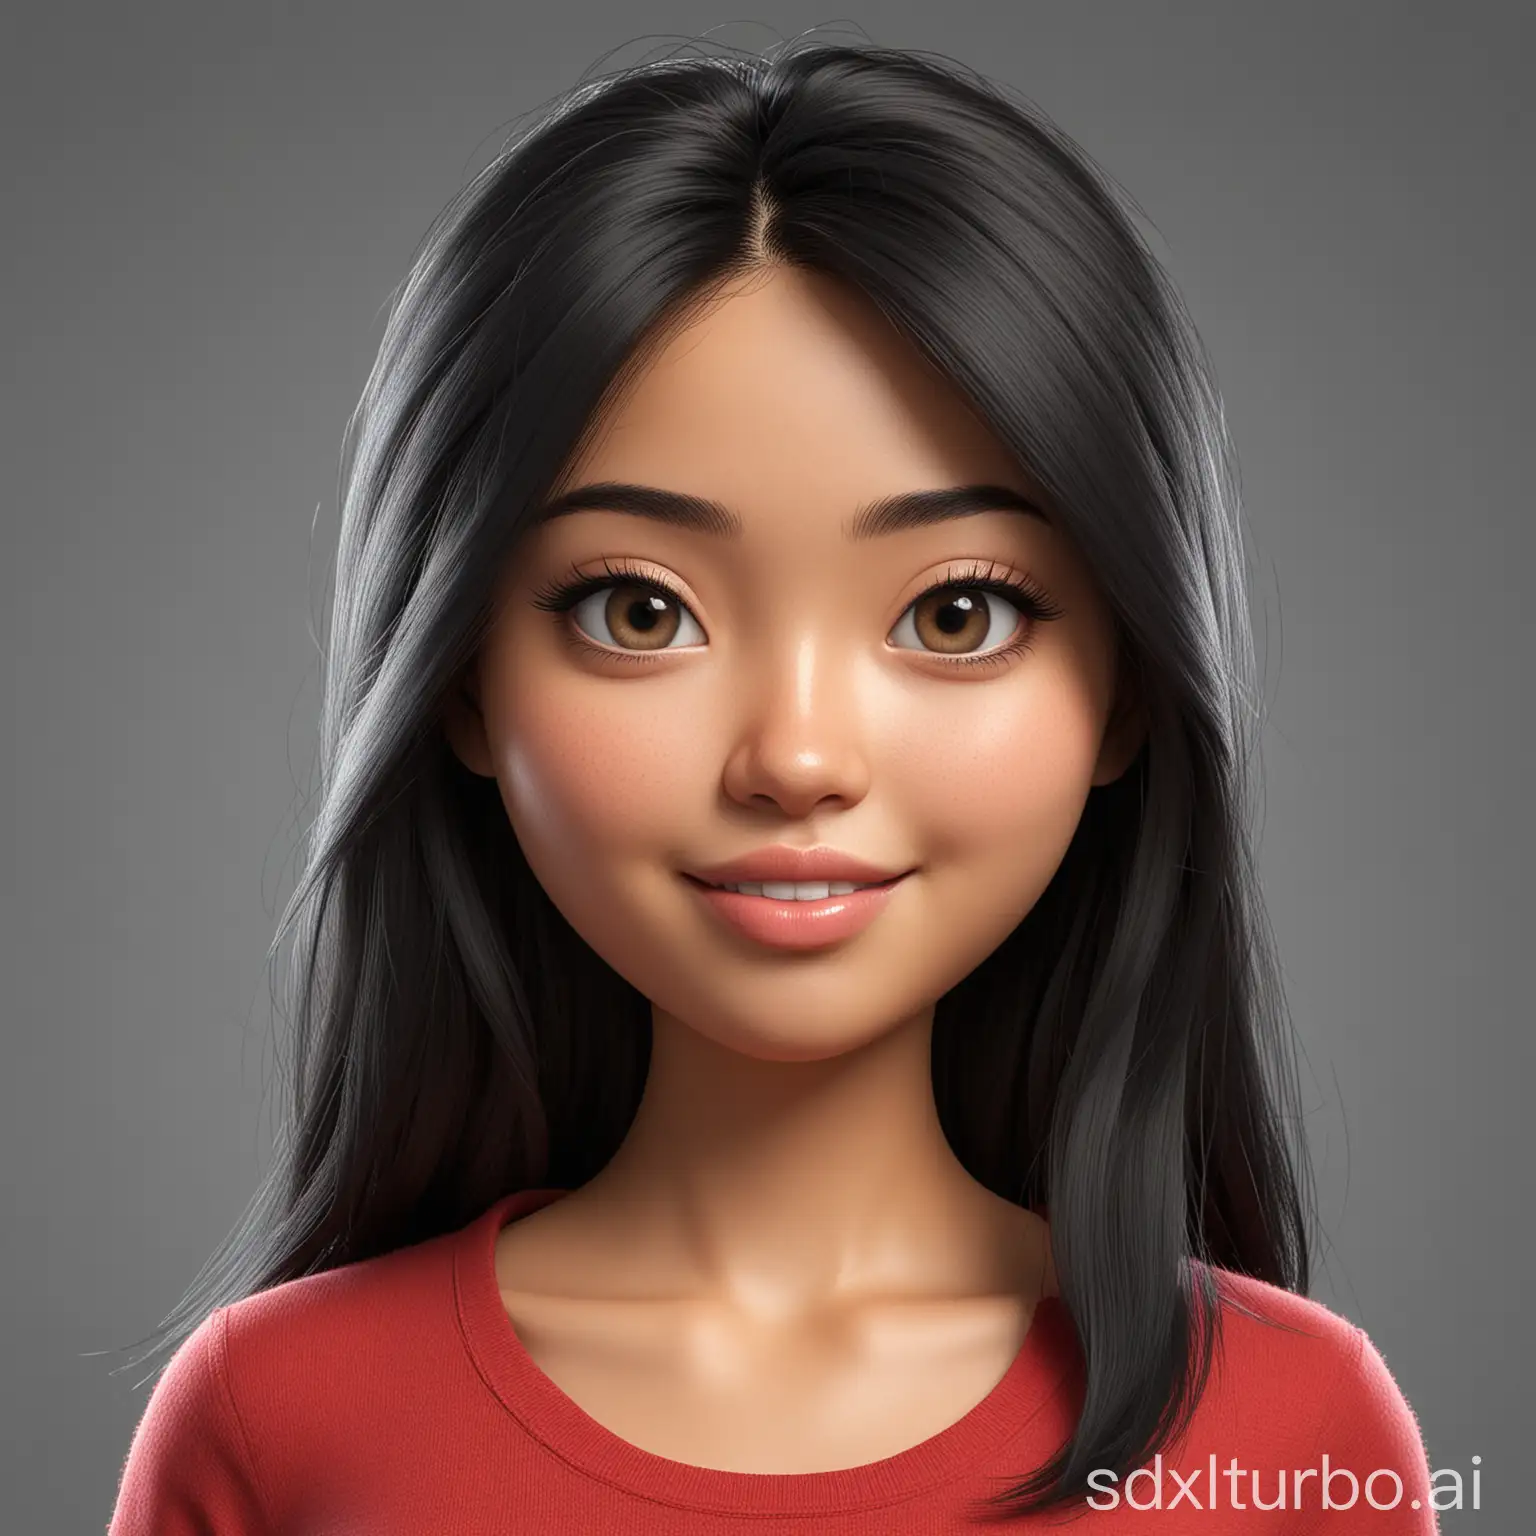 Beautiful-25YearOld-Indonesian-Woman-in-Red-Shirt-3D-Cartoon-Style-Portrait